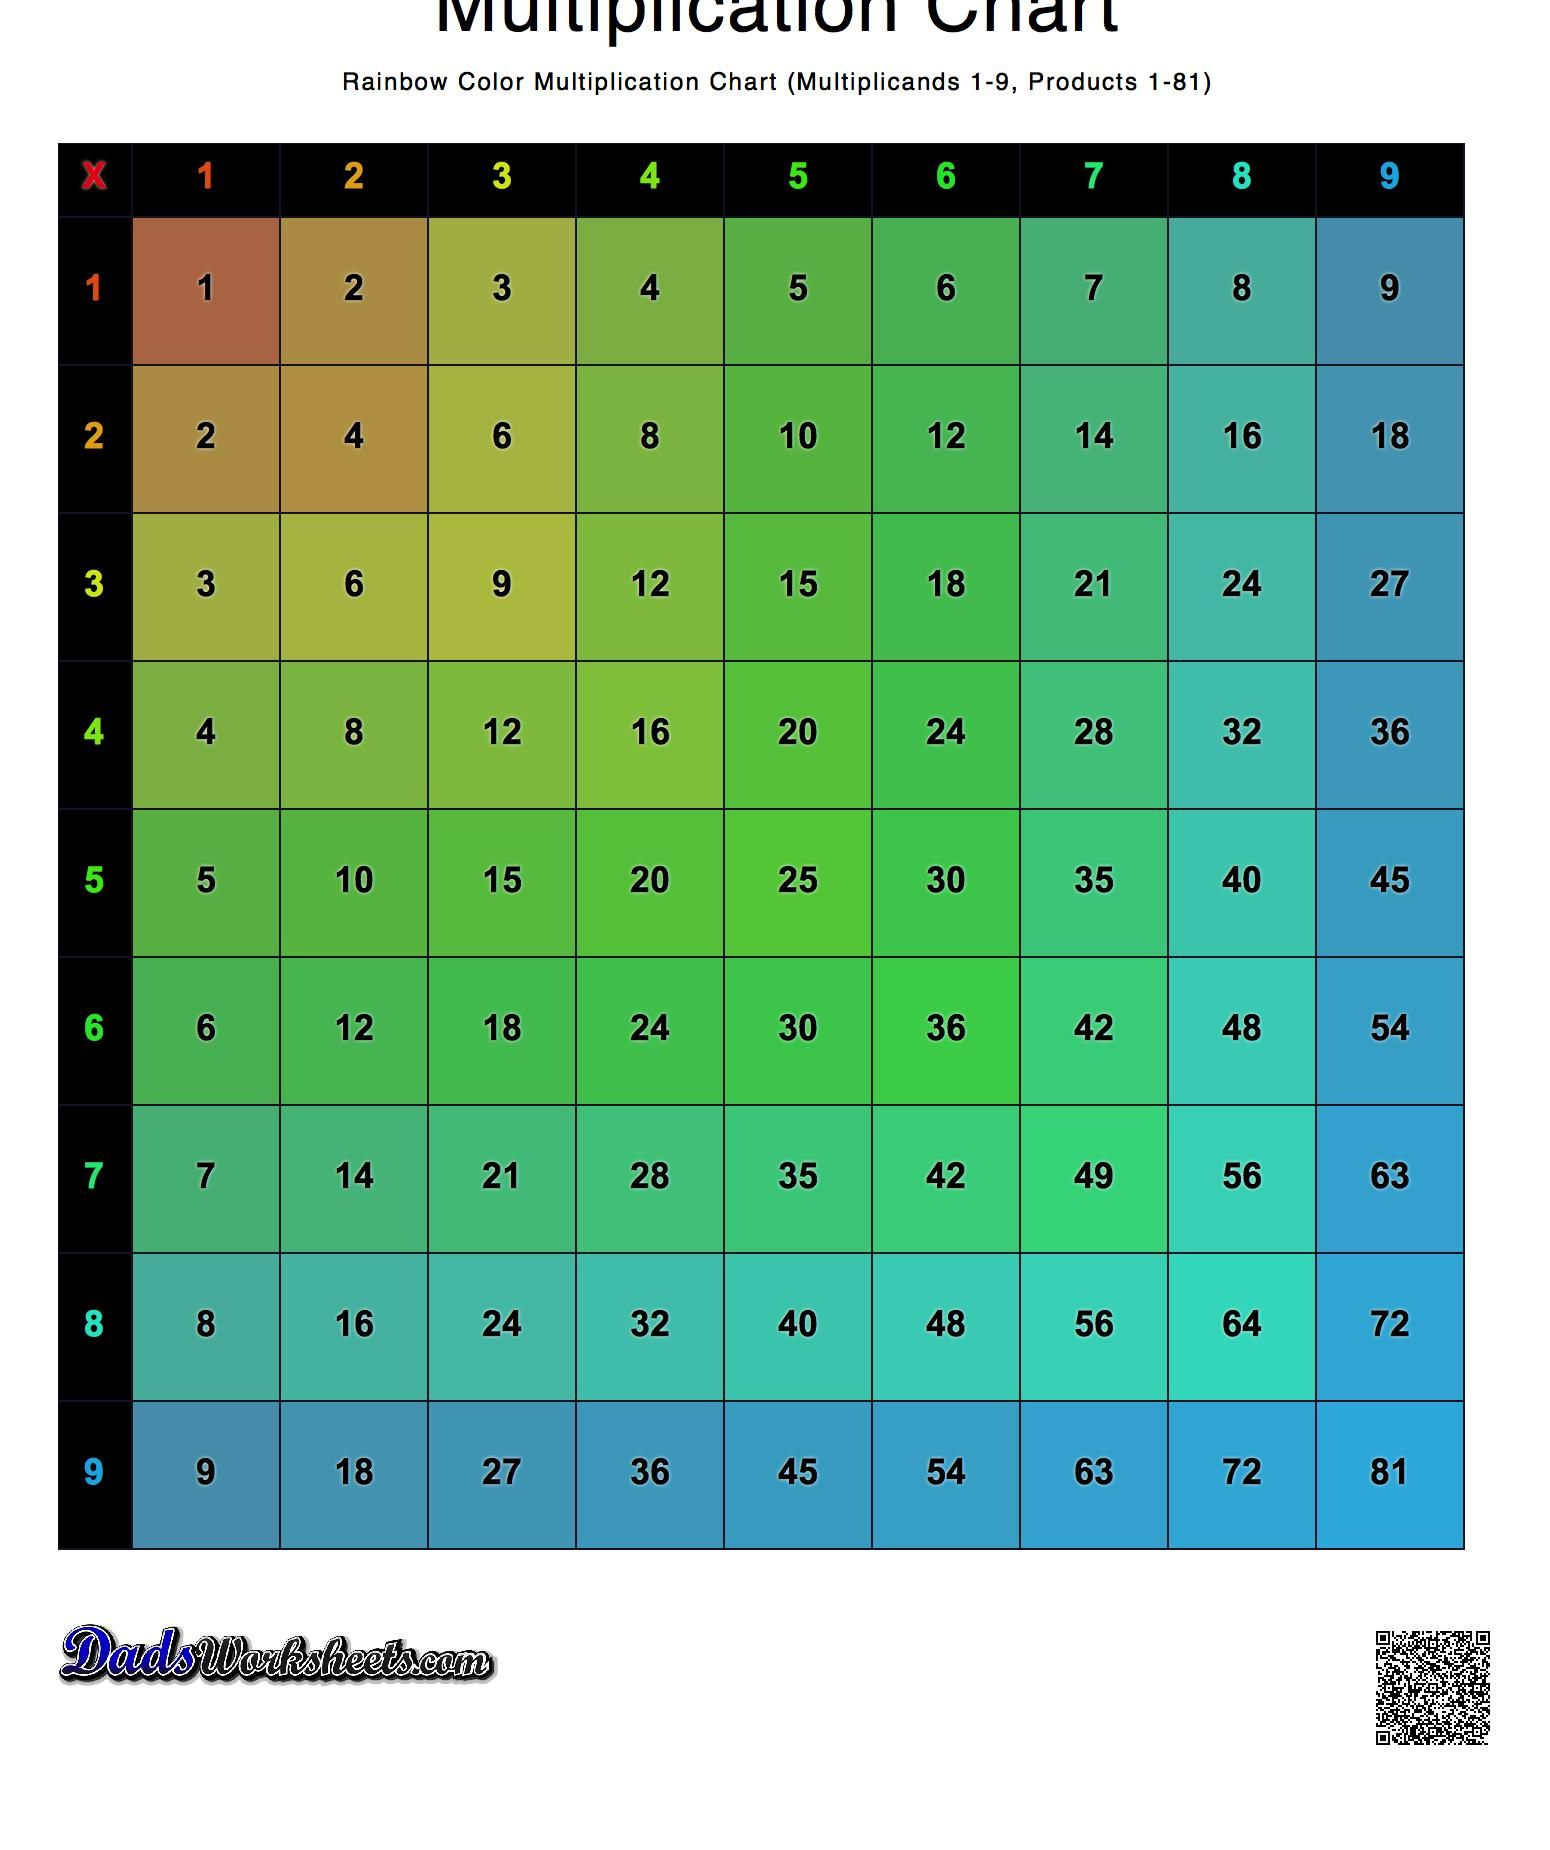 Color Multiplication Chart (Rainbow) | Multiplication Chart